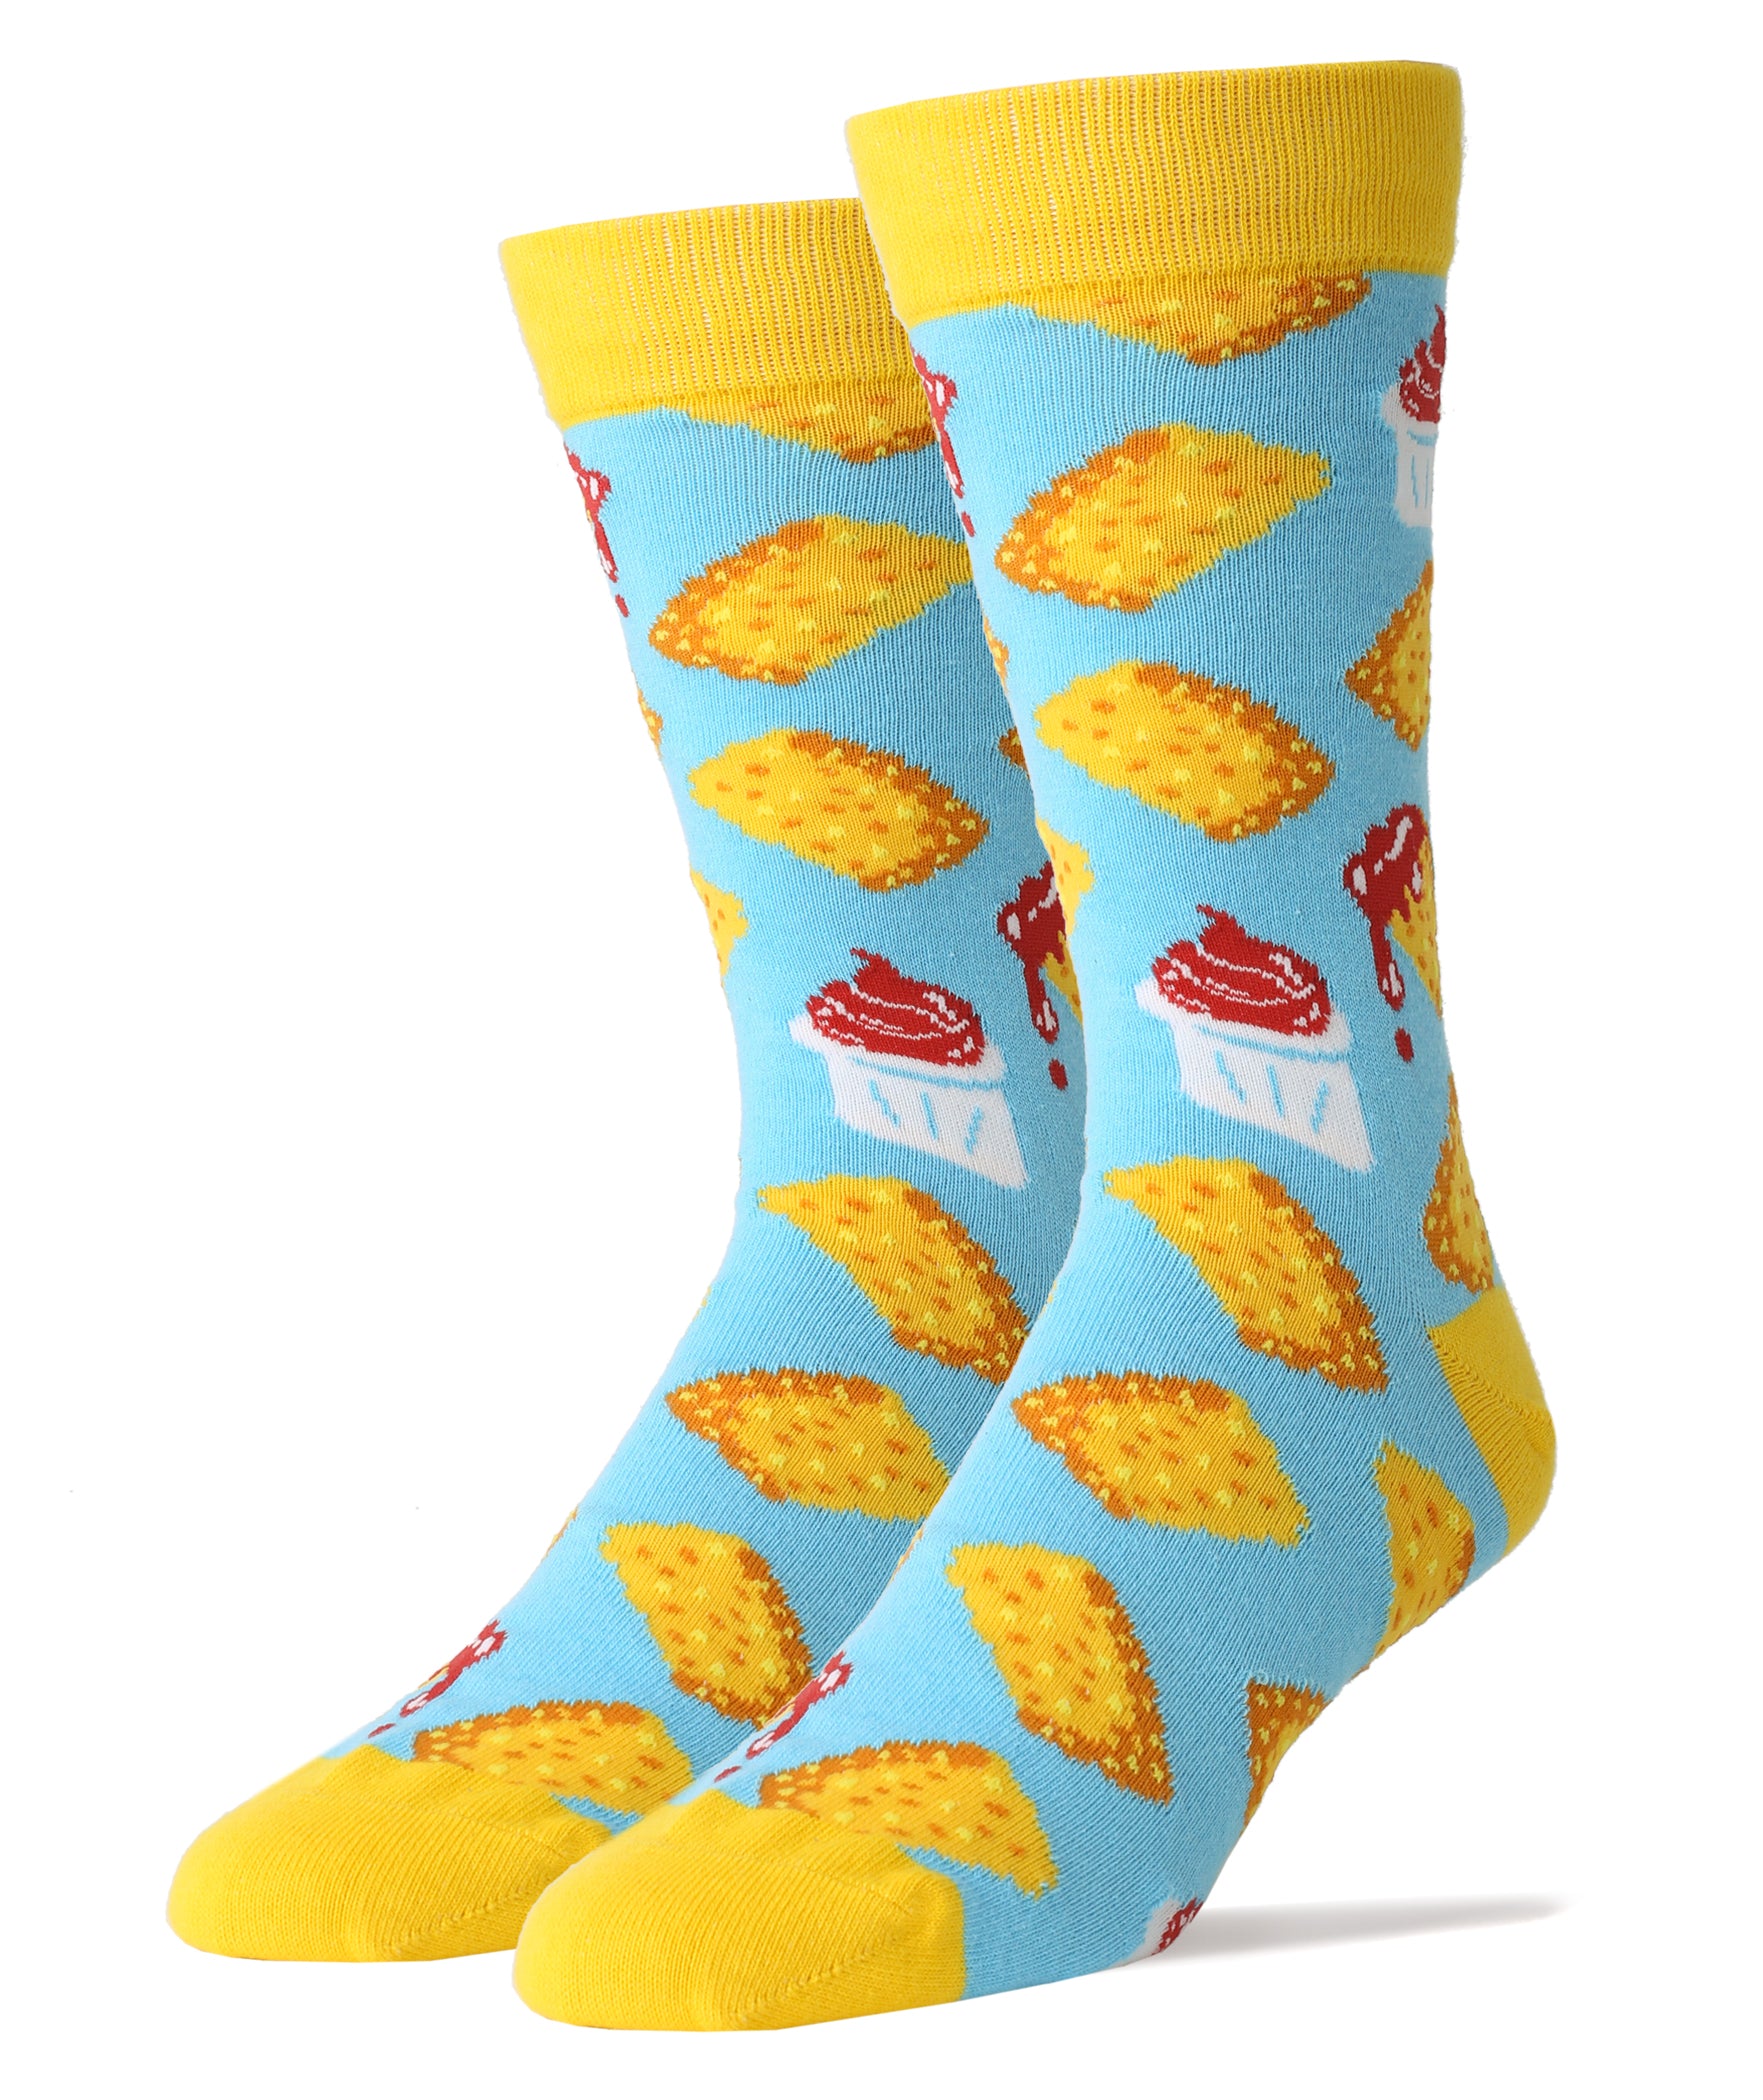 Taters Socks | Food Crew Socks for Men